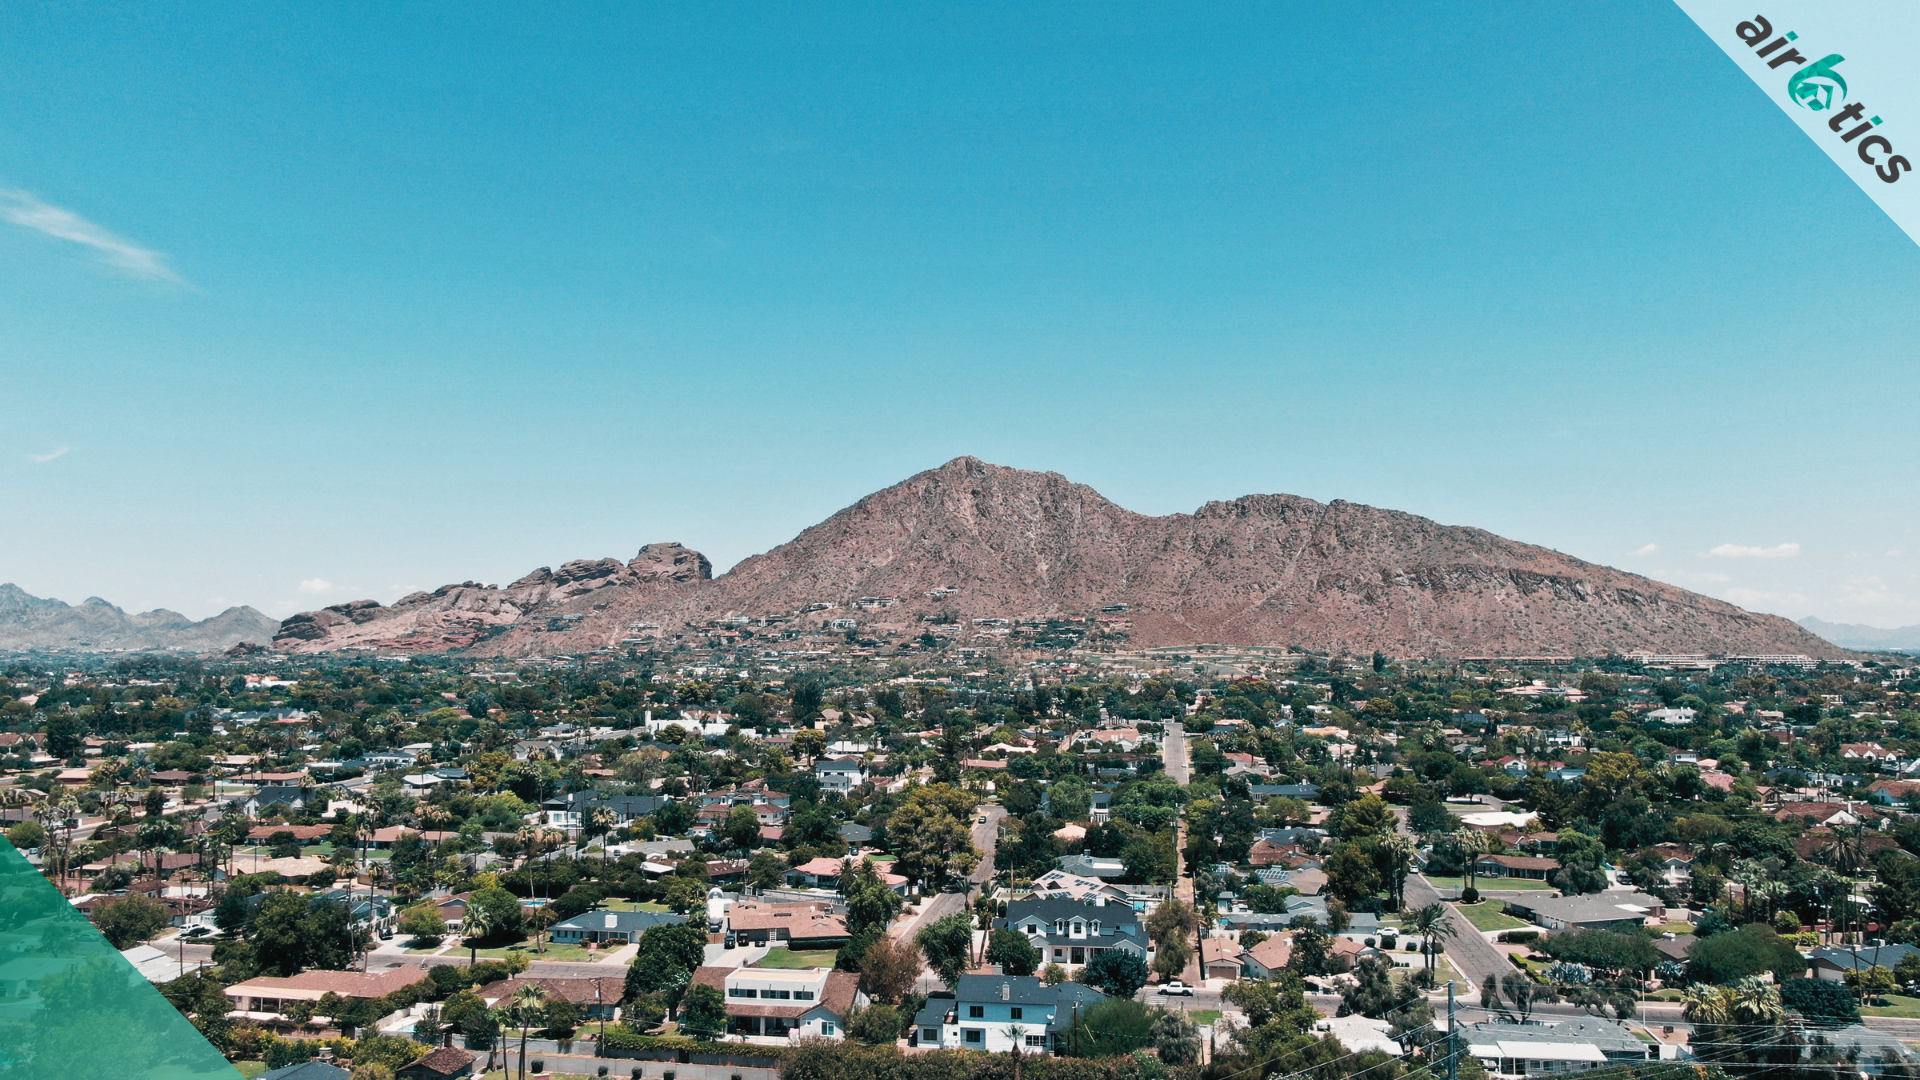 Best Airbnb locations in Arizona